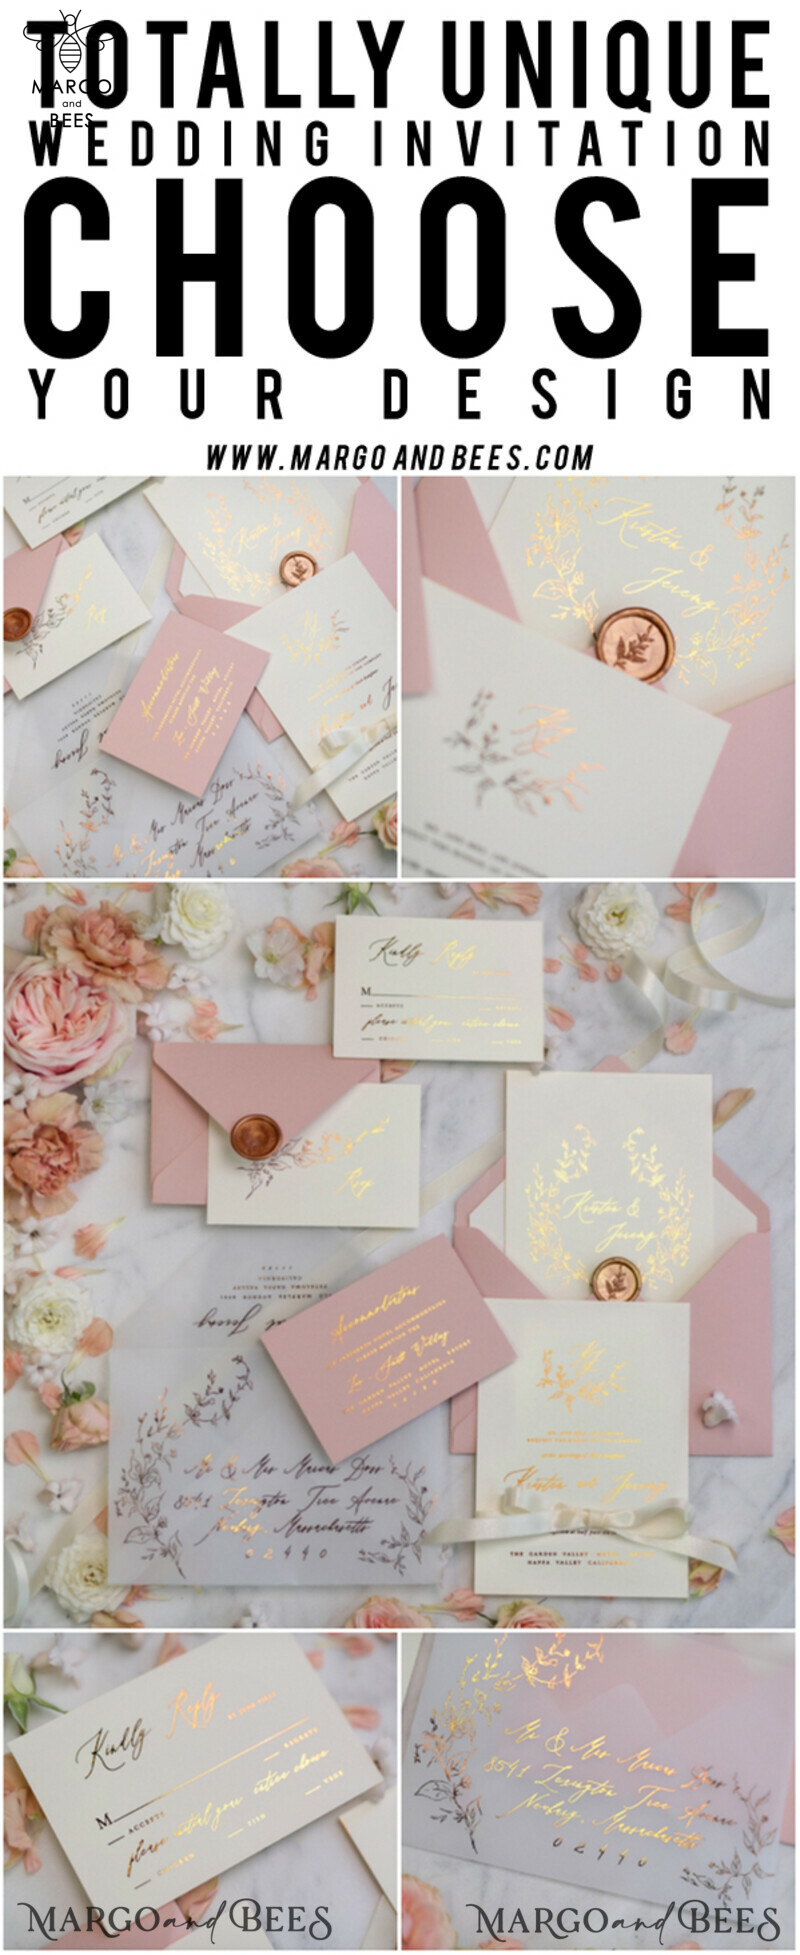 Bespoke Vellum Wedding Invitation Suite: Romantic Blush Pink and Glamour Gold Foil for an Elegant Golden Wedding-37